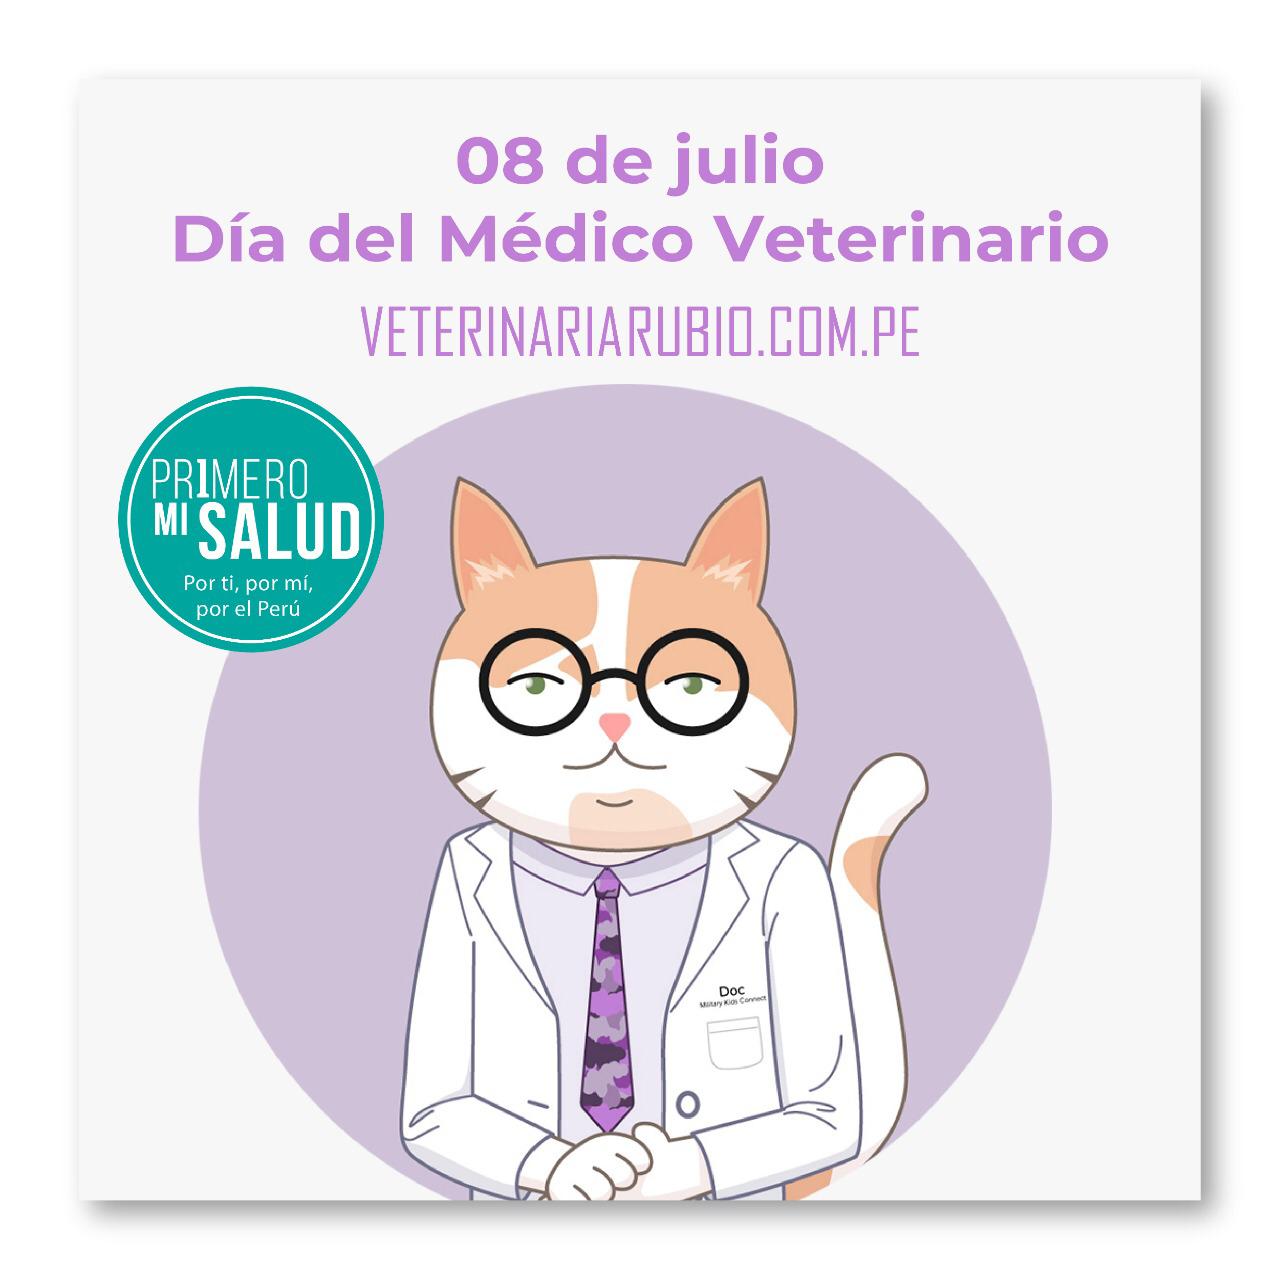 Veterinaria Rubio